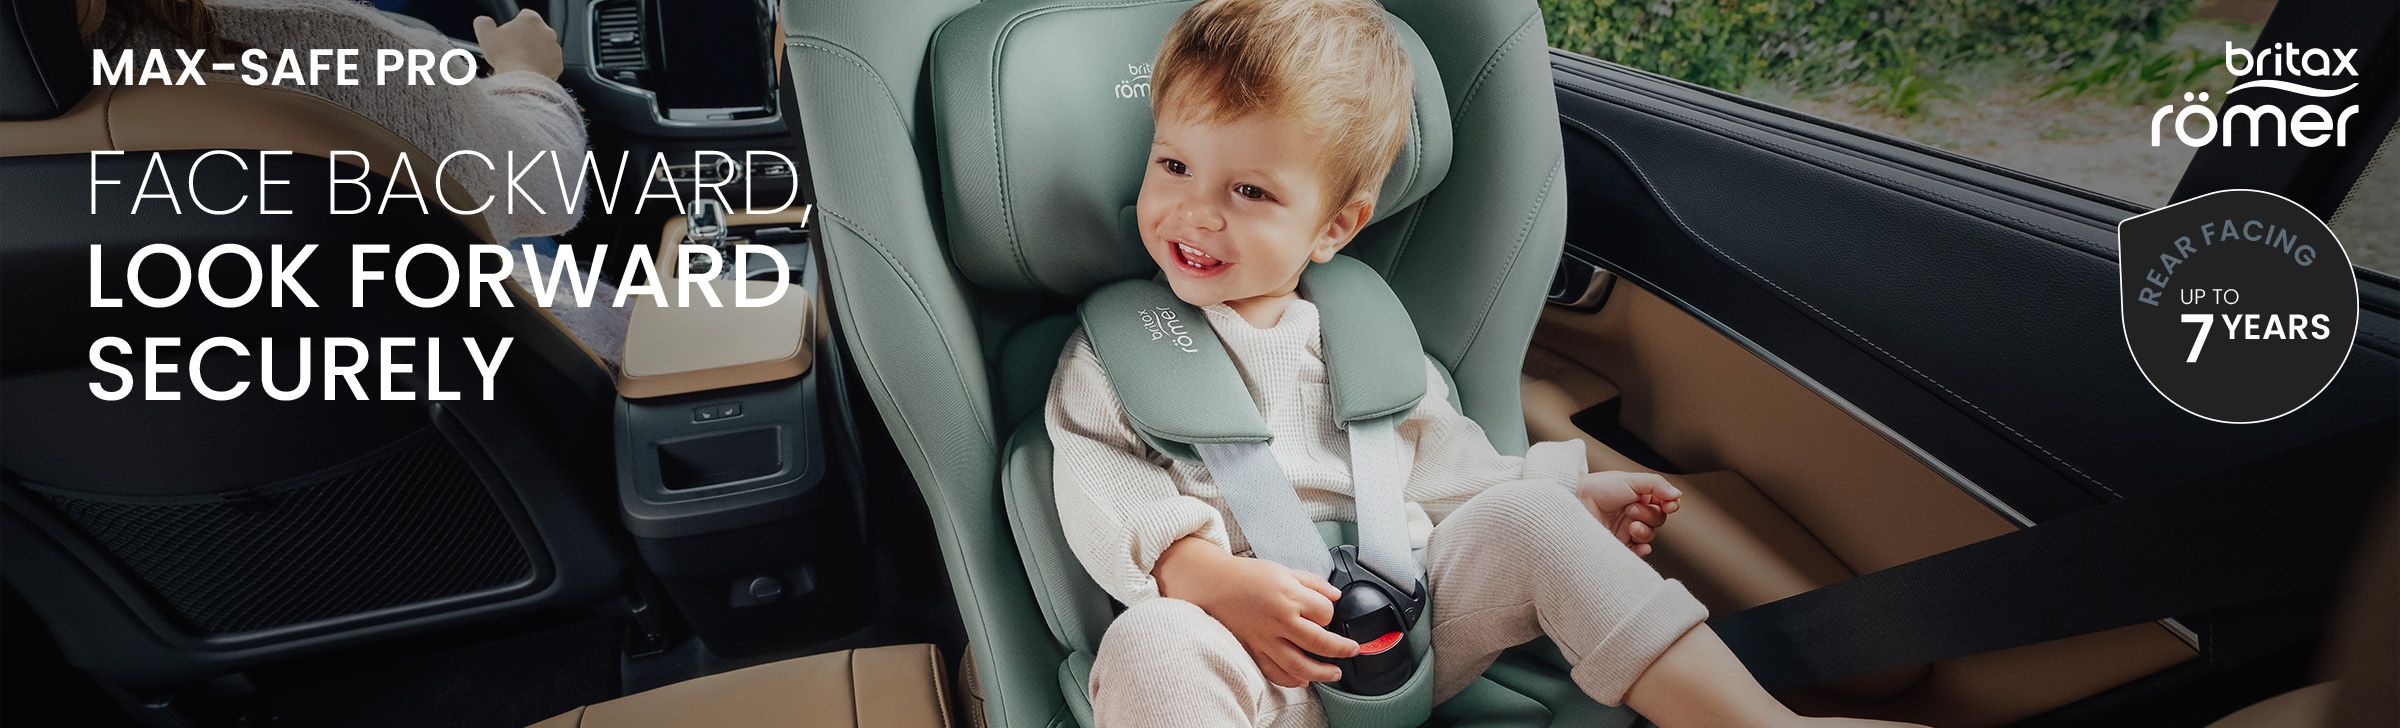 Baby in car in Britax car seat